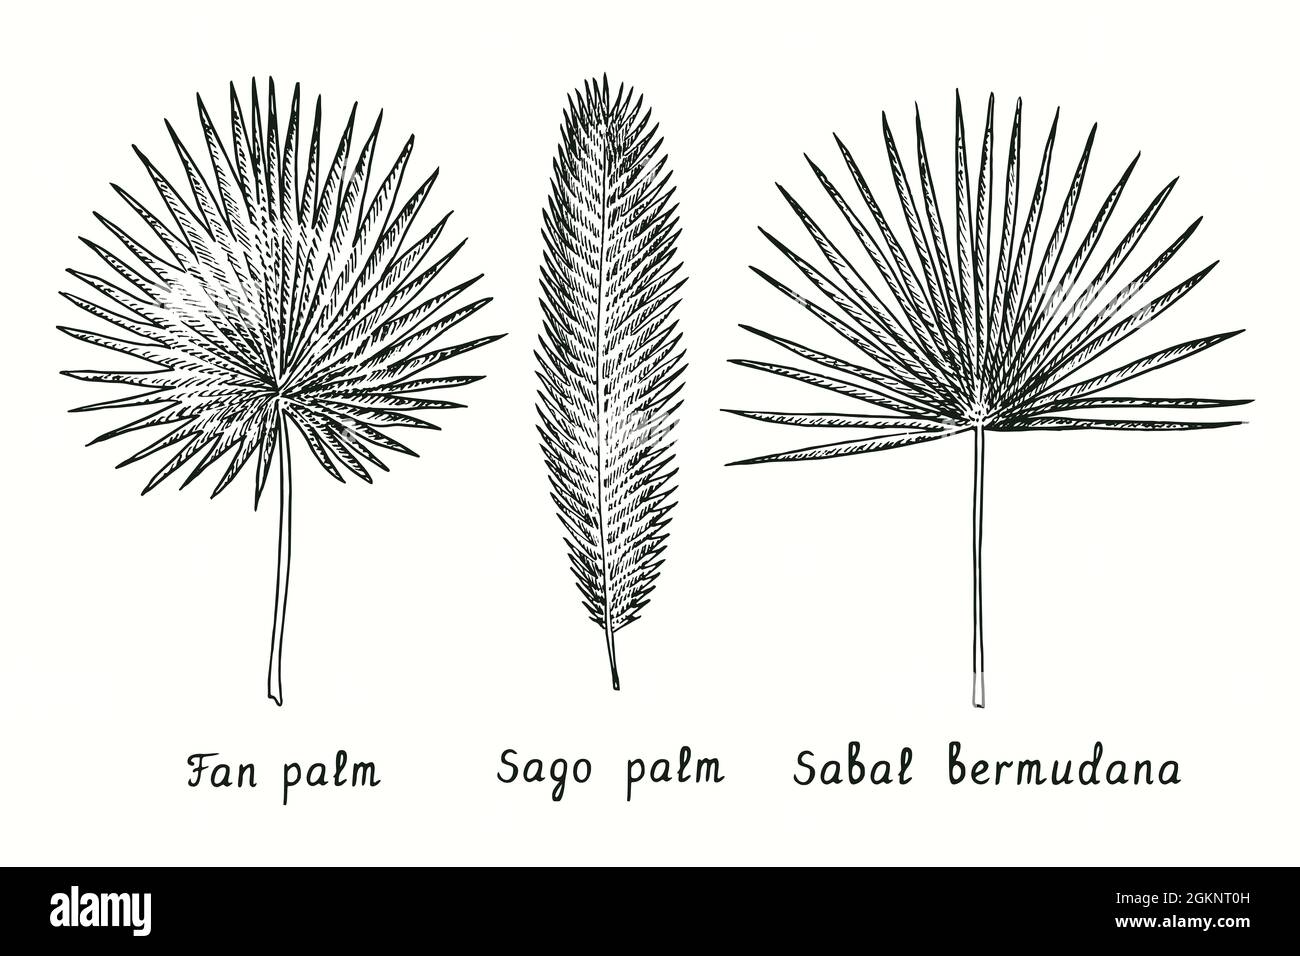 Fan palm (Livistona australia), Sago palm (Cycas revolut), Sabal bermudana leaf. Ink black and white doodle drawing in woodcut style. Stock Photo